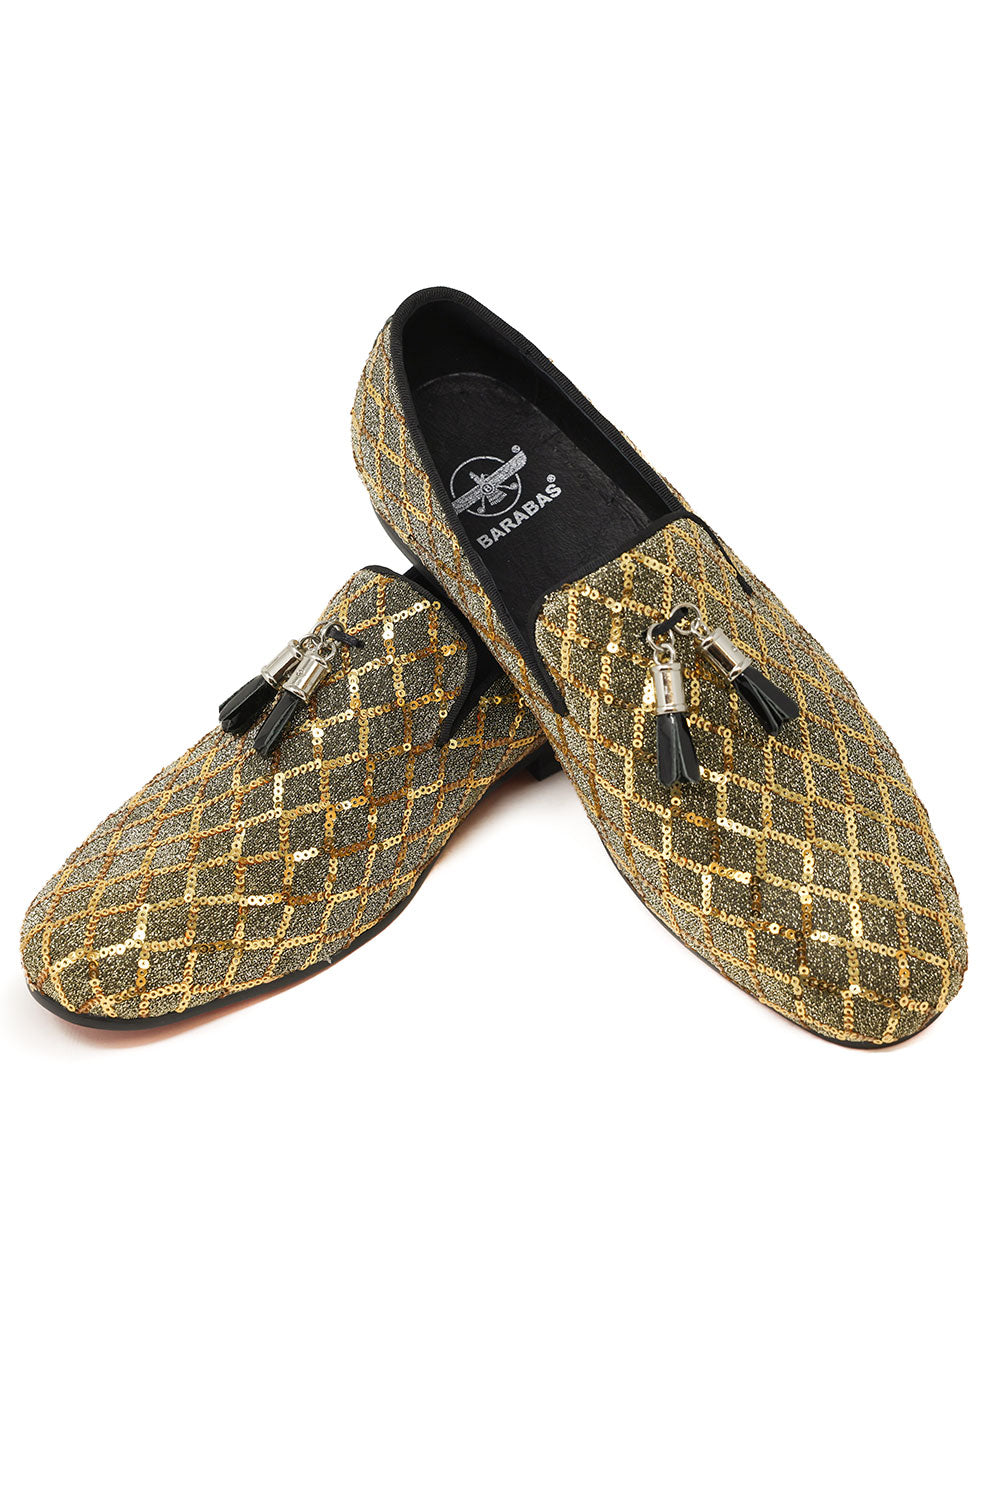 Barabas Men's Sequin Design Tassel Slip On Loafer Shoes 2SH3099 Gold